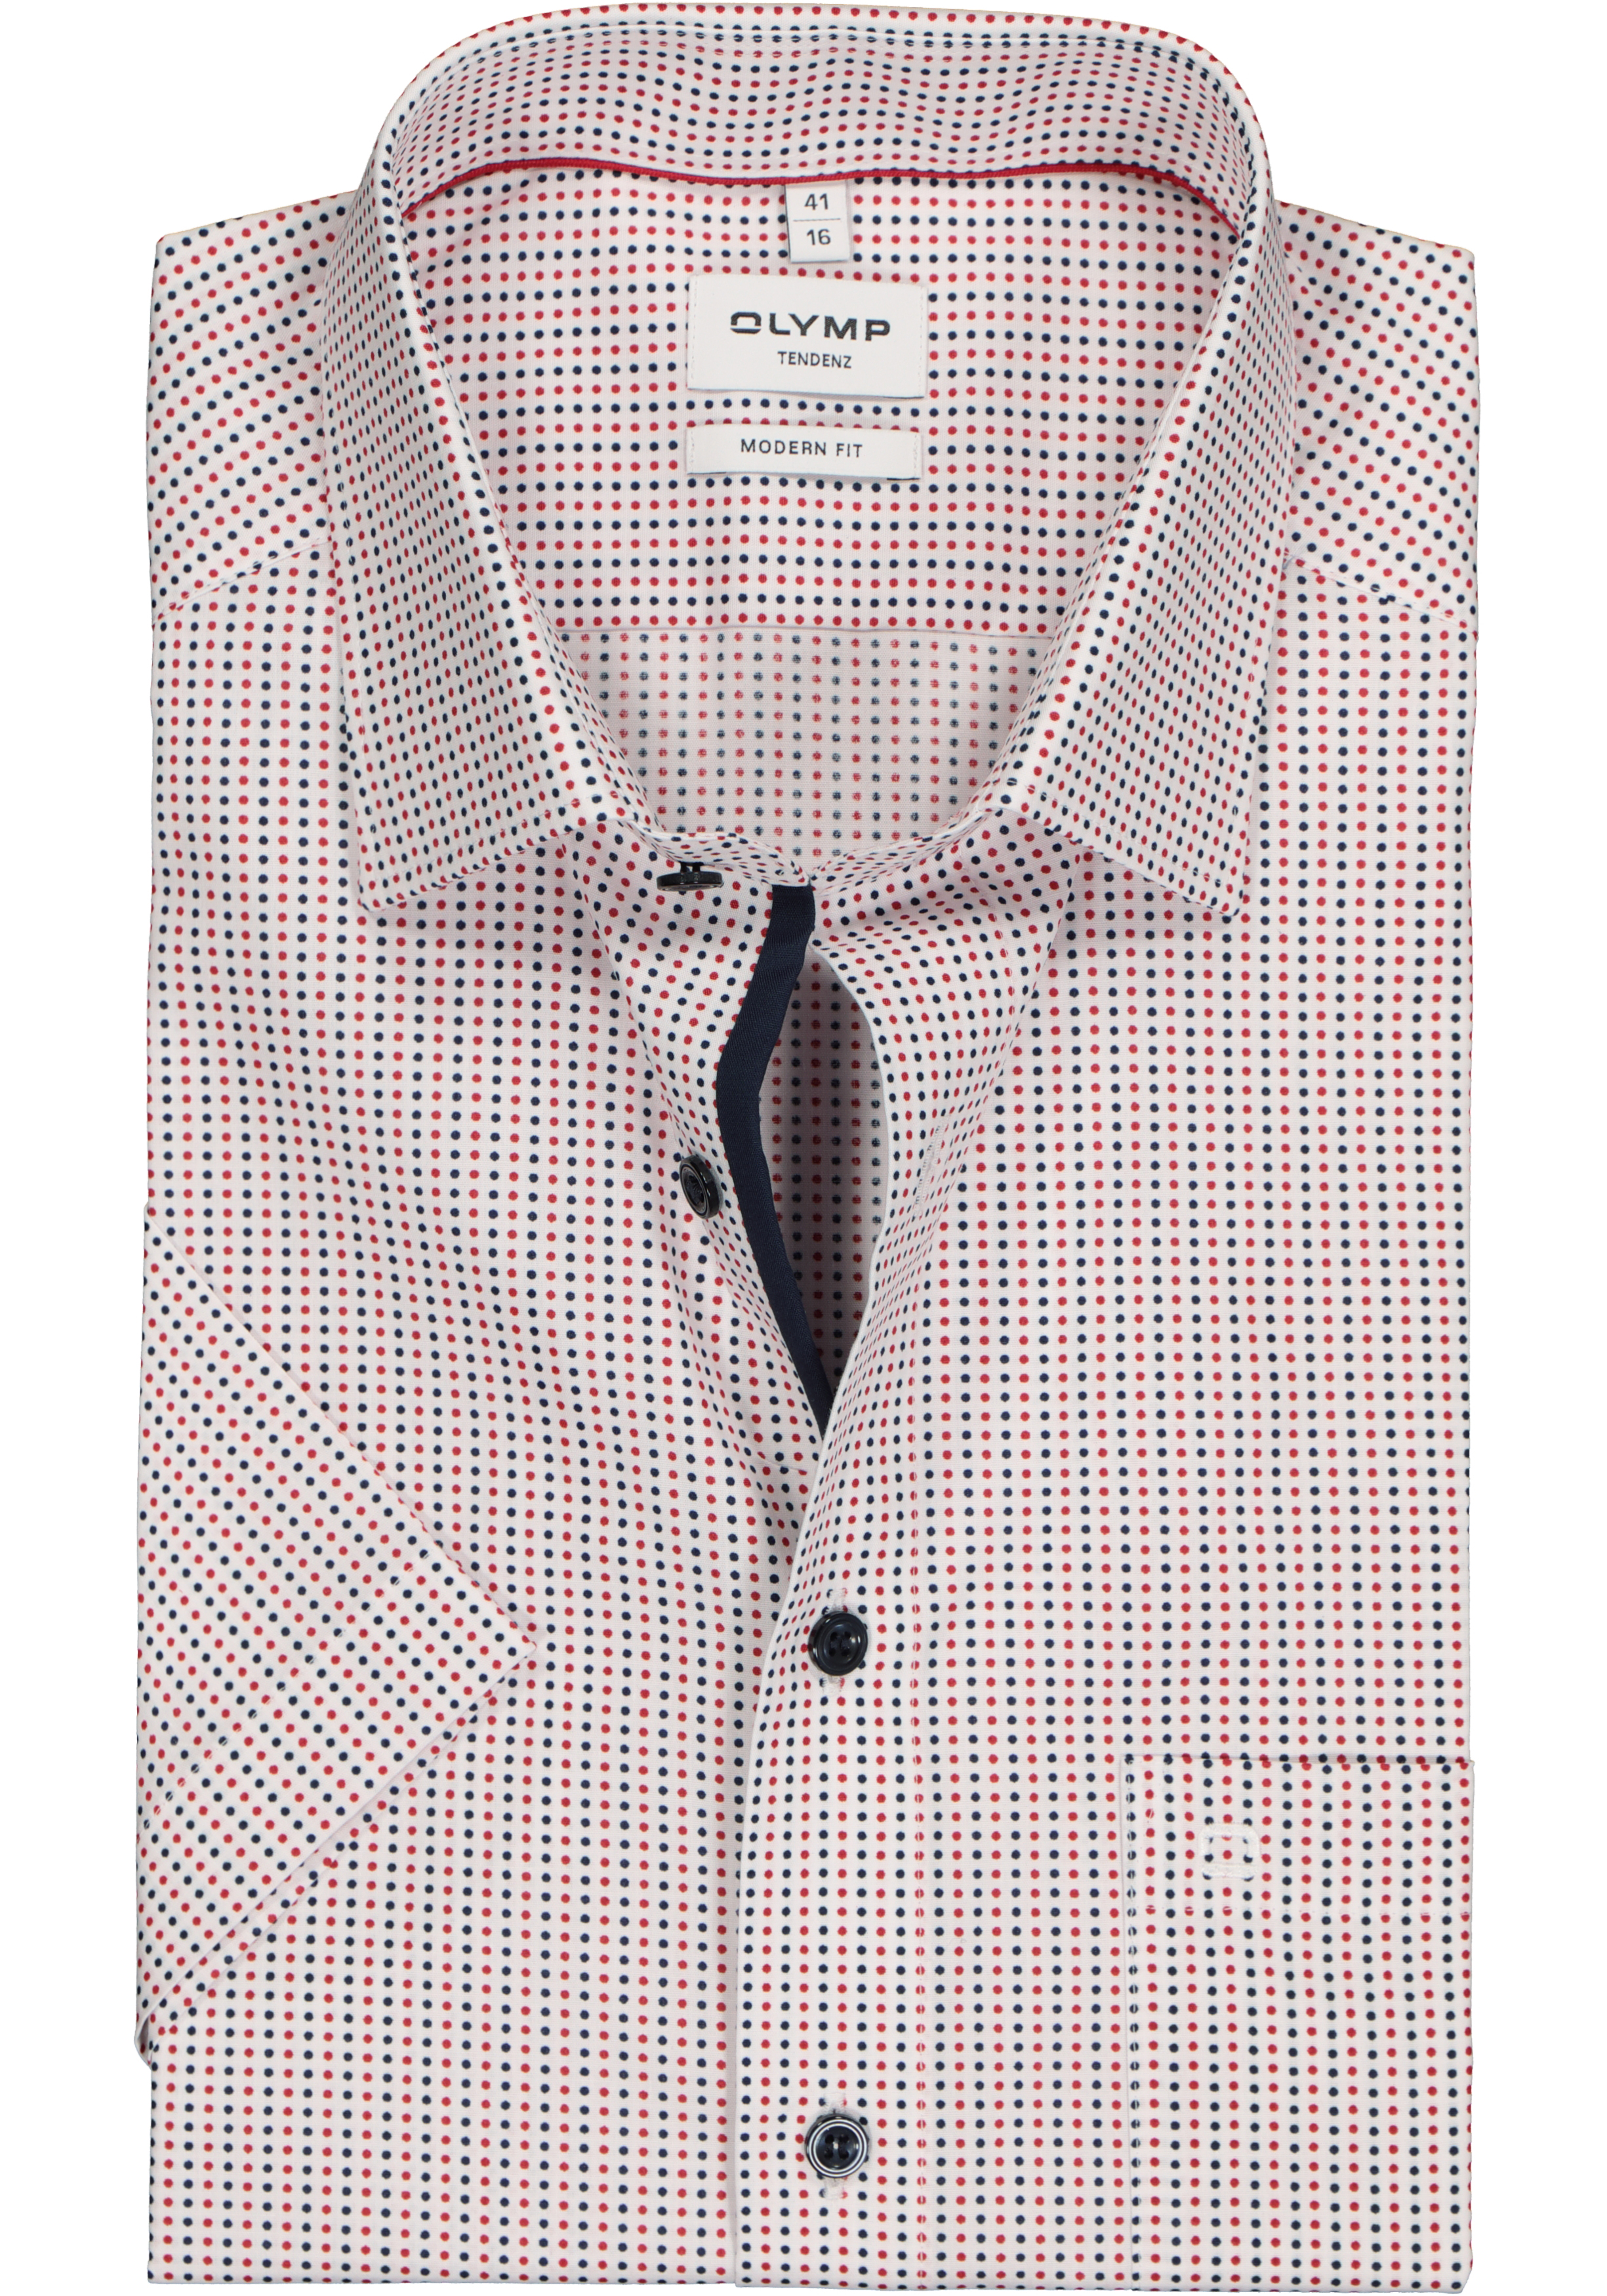 OLYMP modern fit overhemd, korte mouw, popeline, wit met rood en blauw gestipt (contrast)